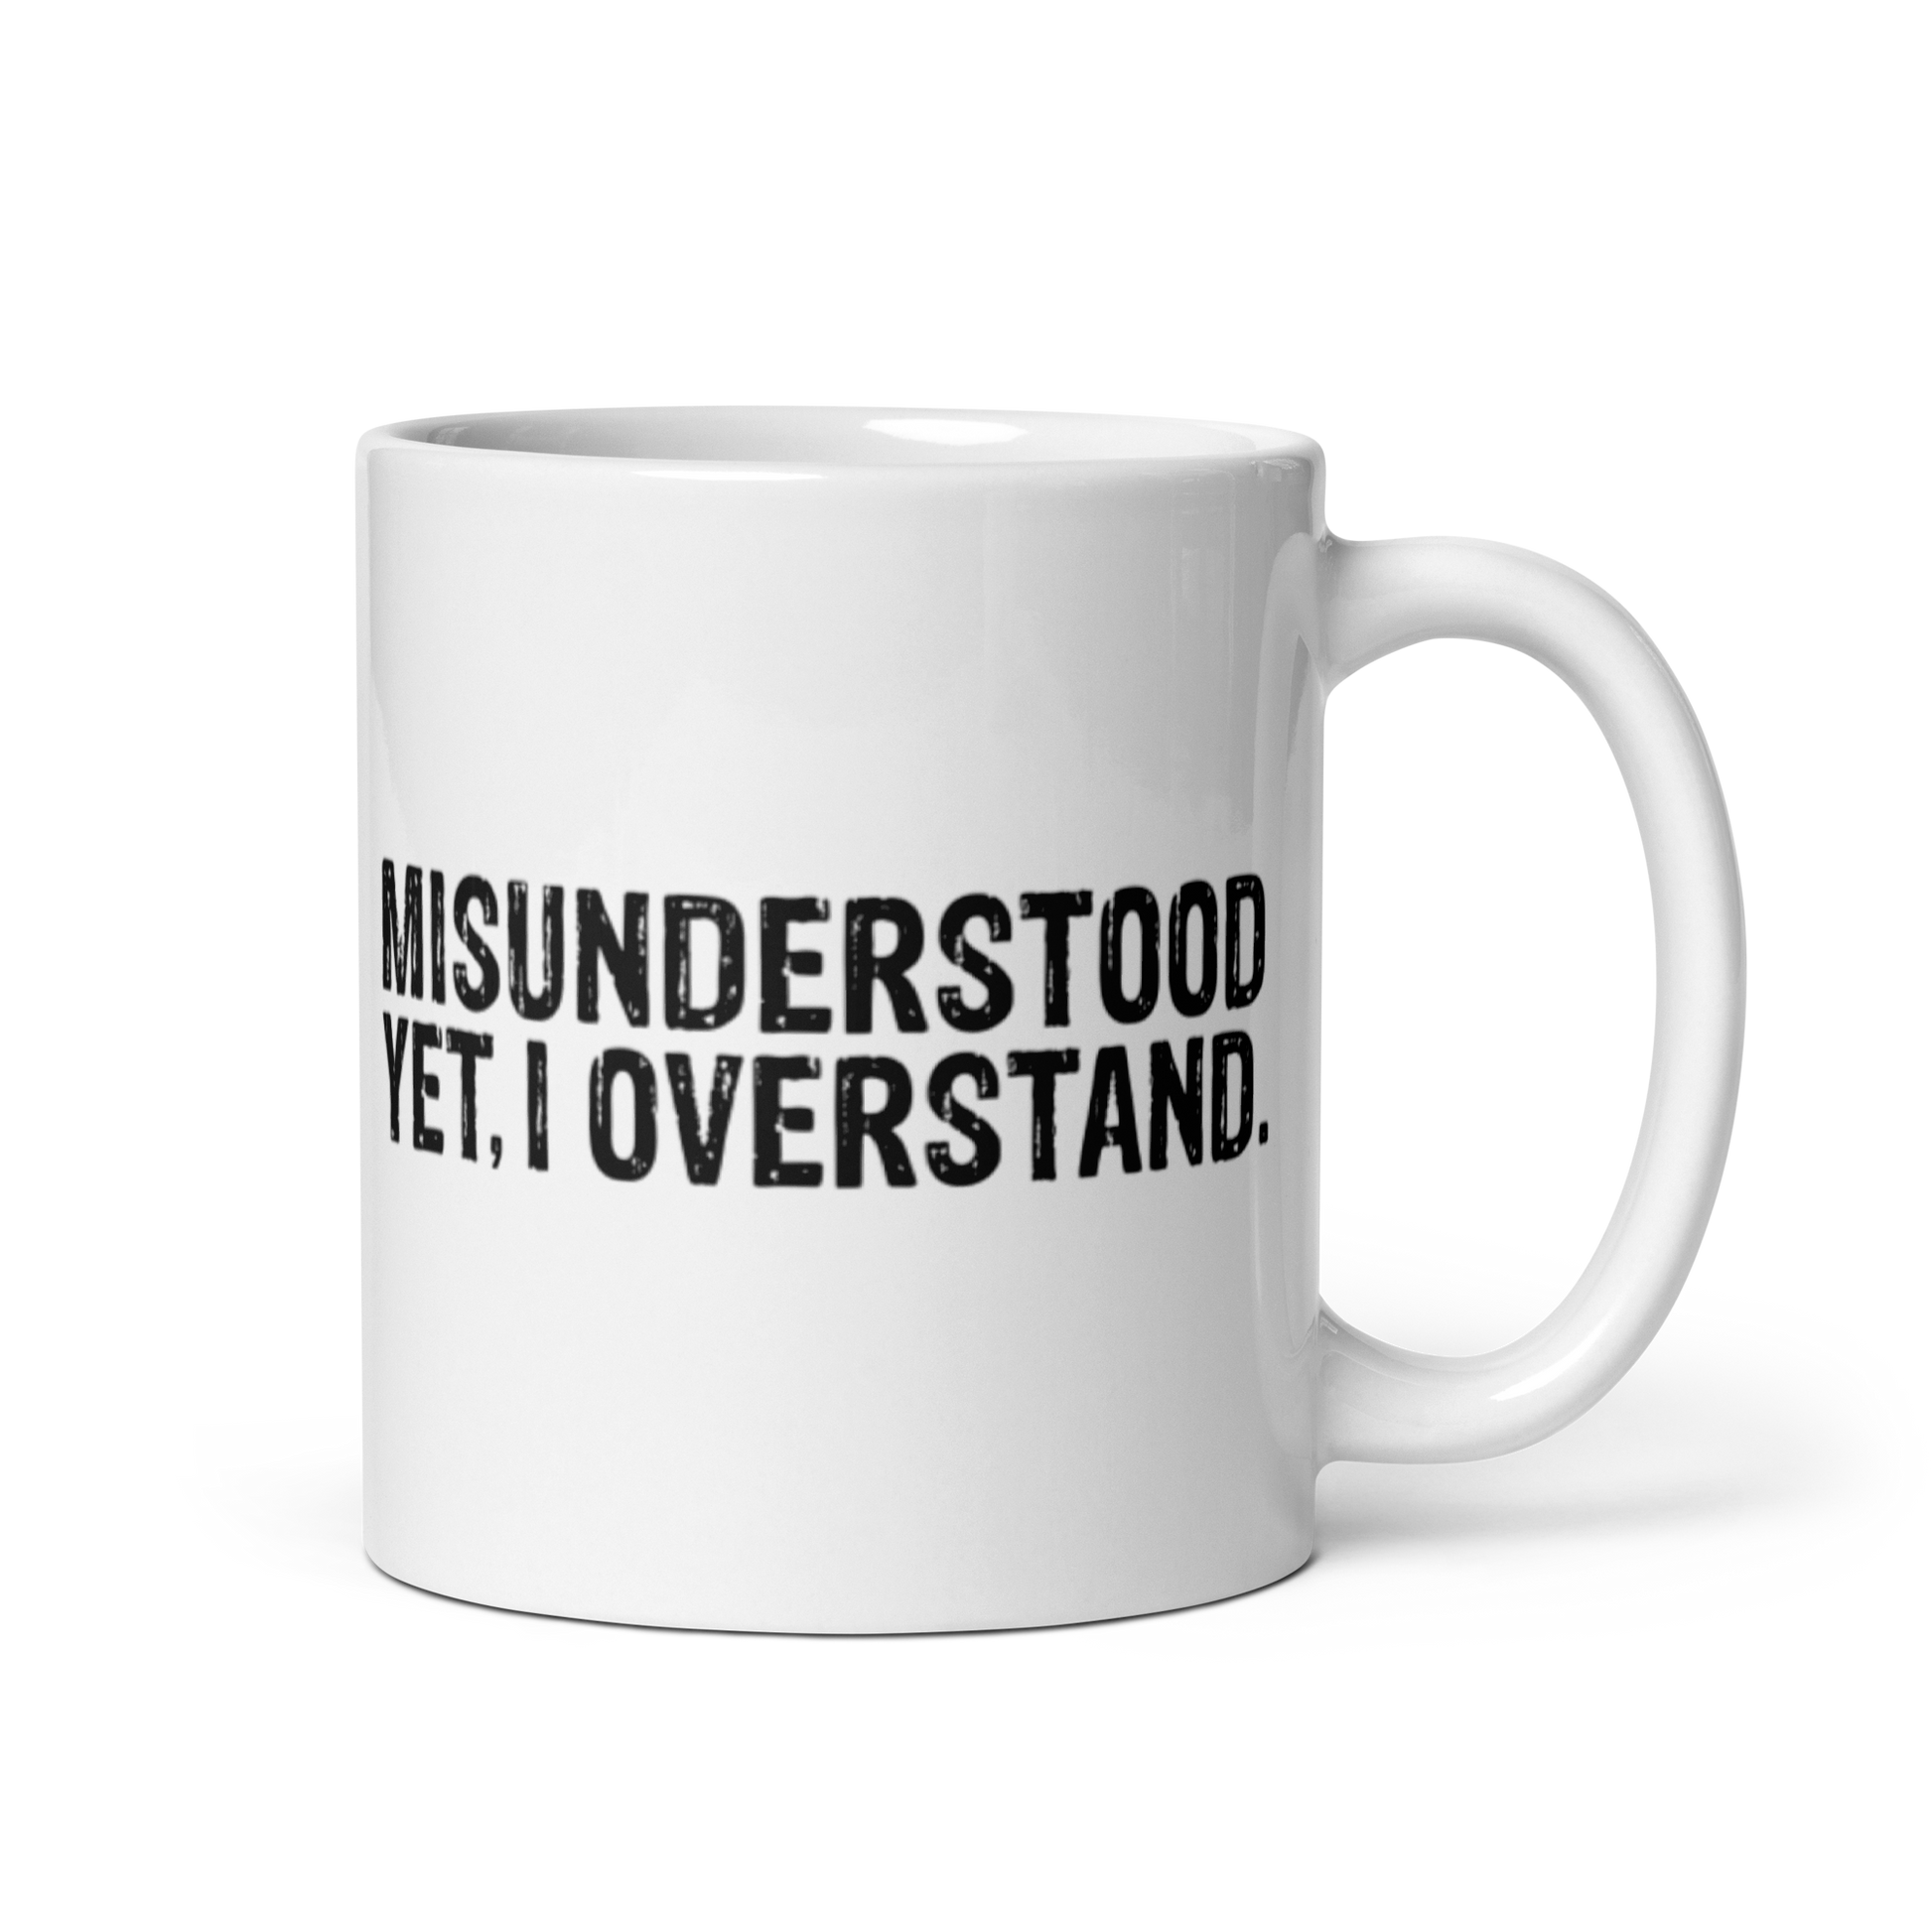 Misunderstood. Yet, I Overstand White Glossy Mug 